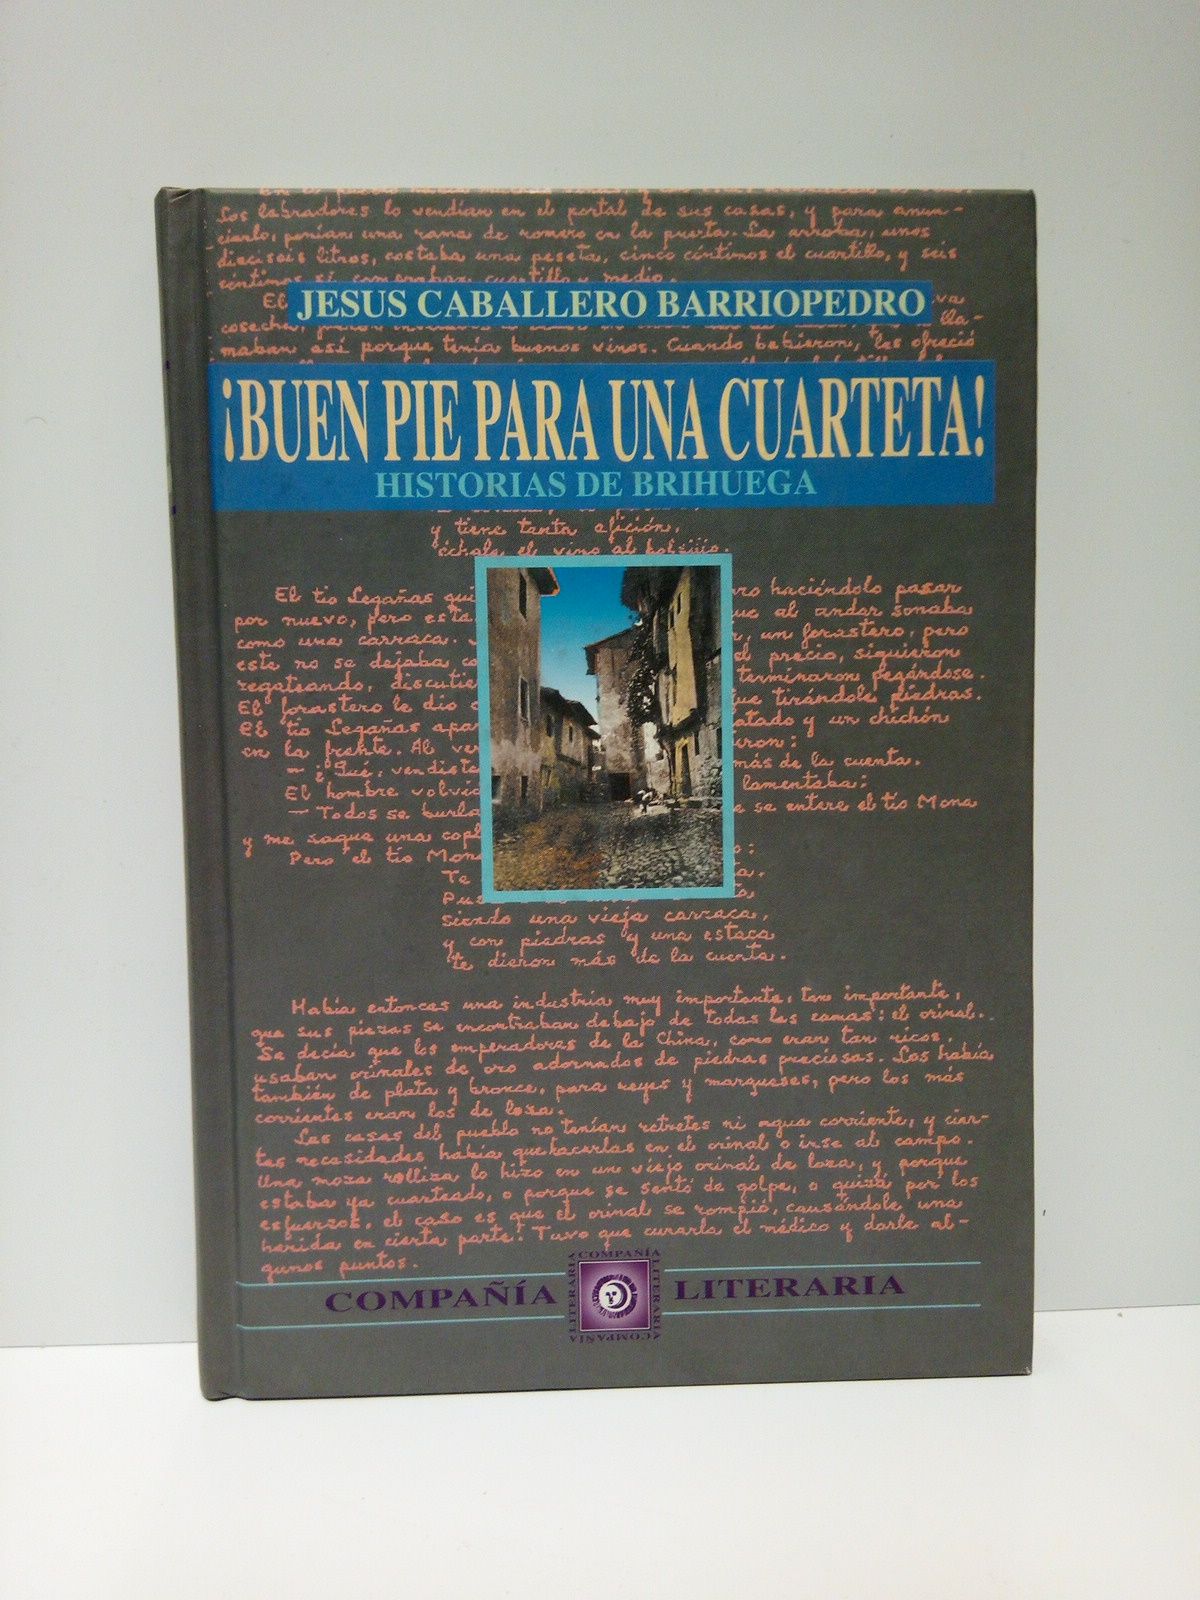 CABALLERO BARRIOPEDRO, Jess -  Buen pi para una cuarteta : Historias de Brihuega